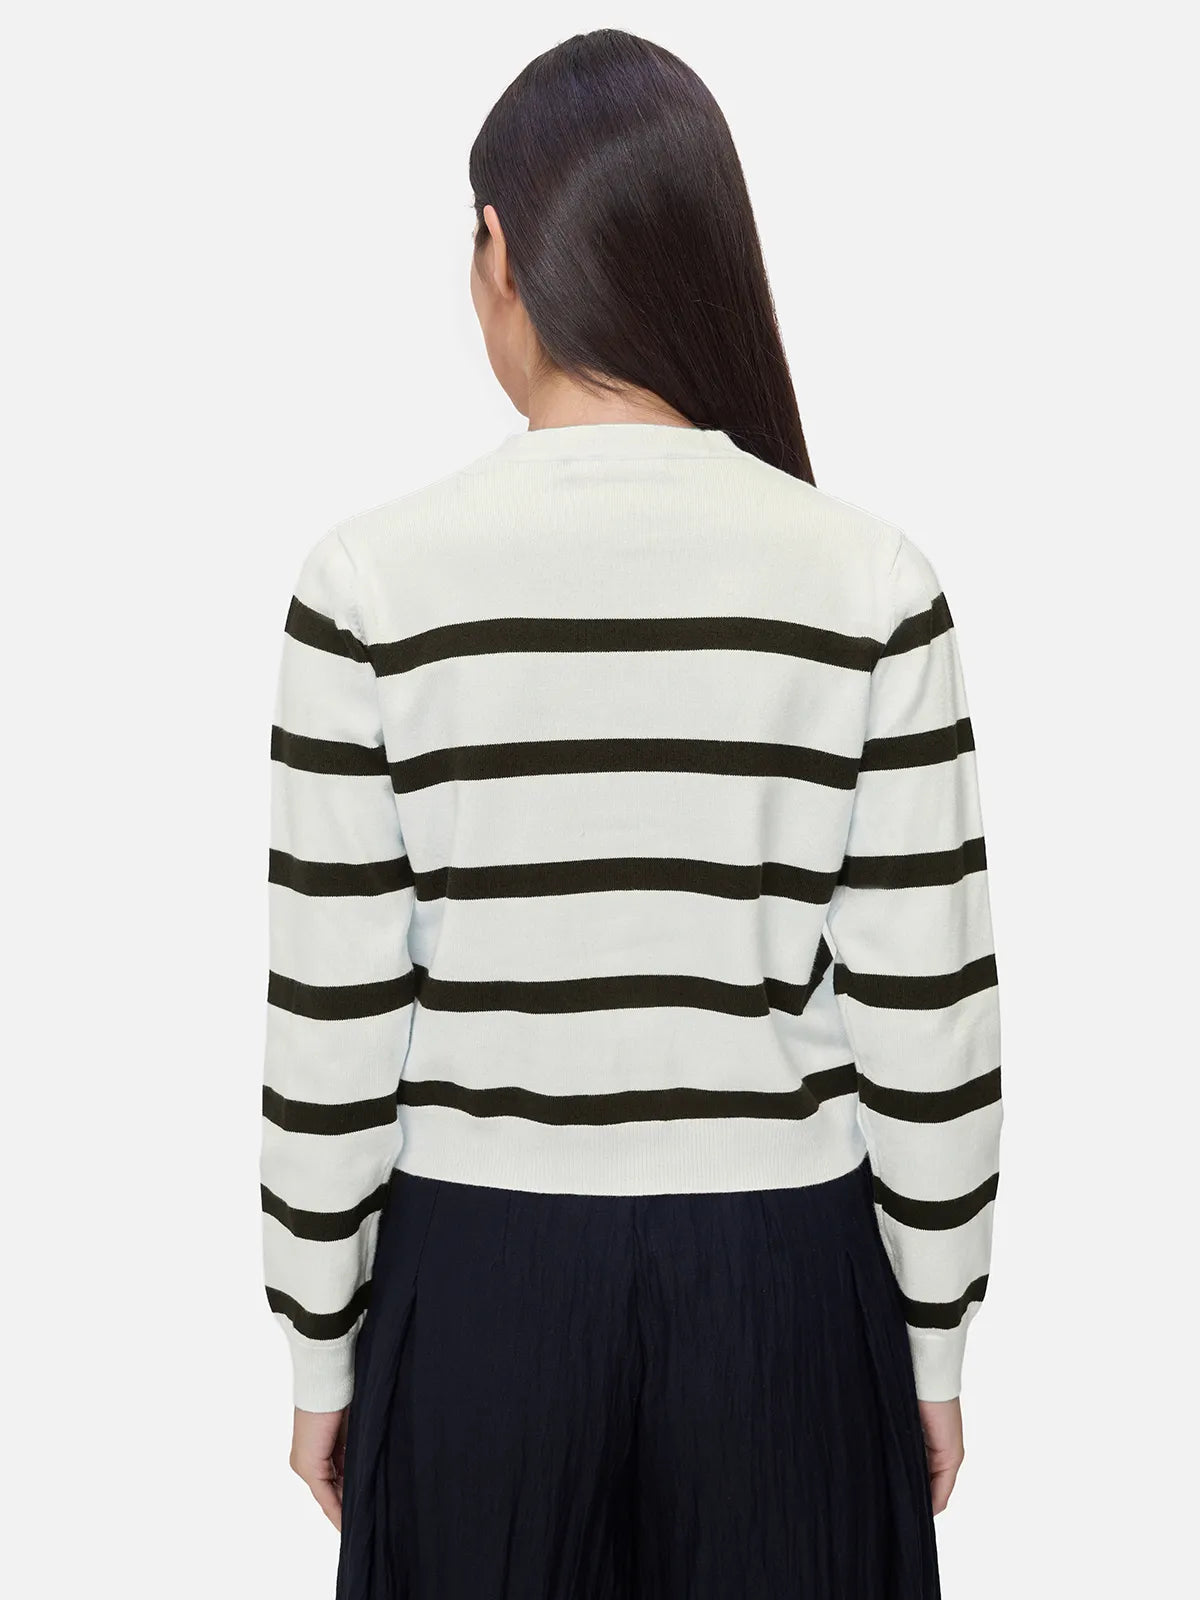 Classic Round Neck Striped Cardigan Sweater